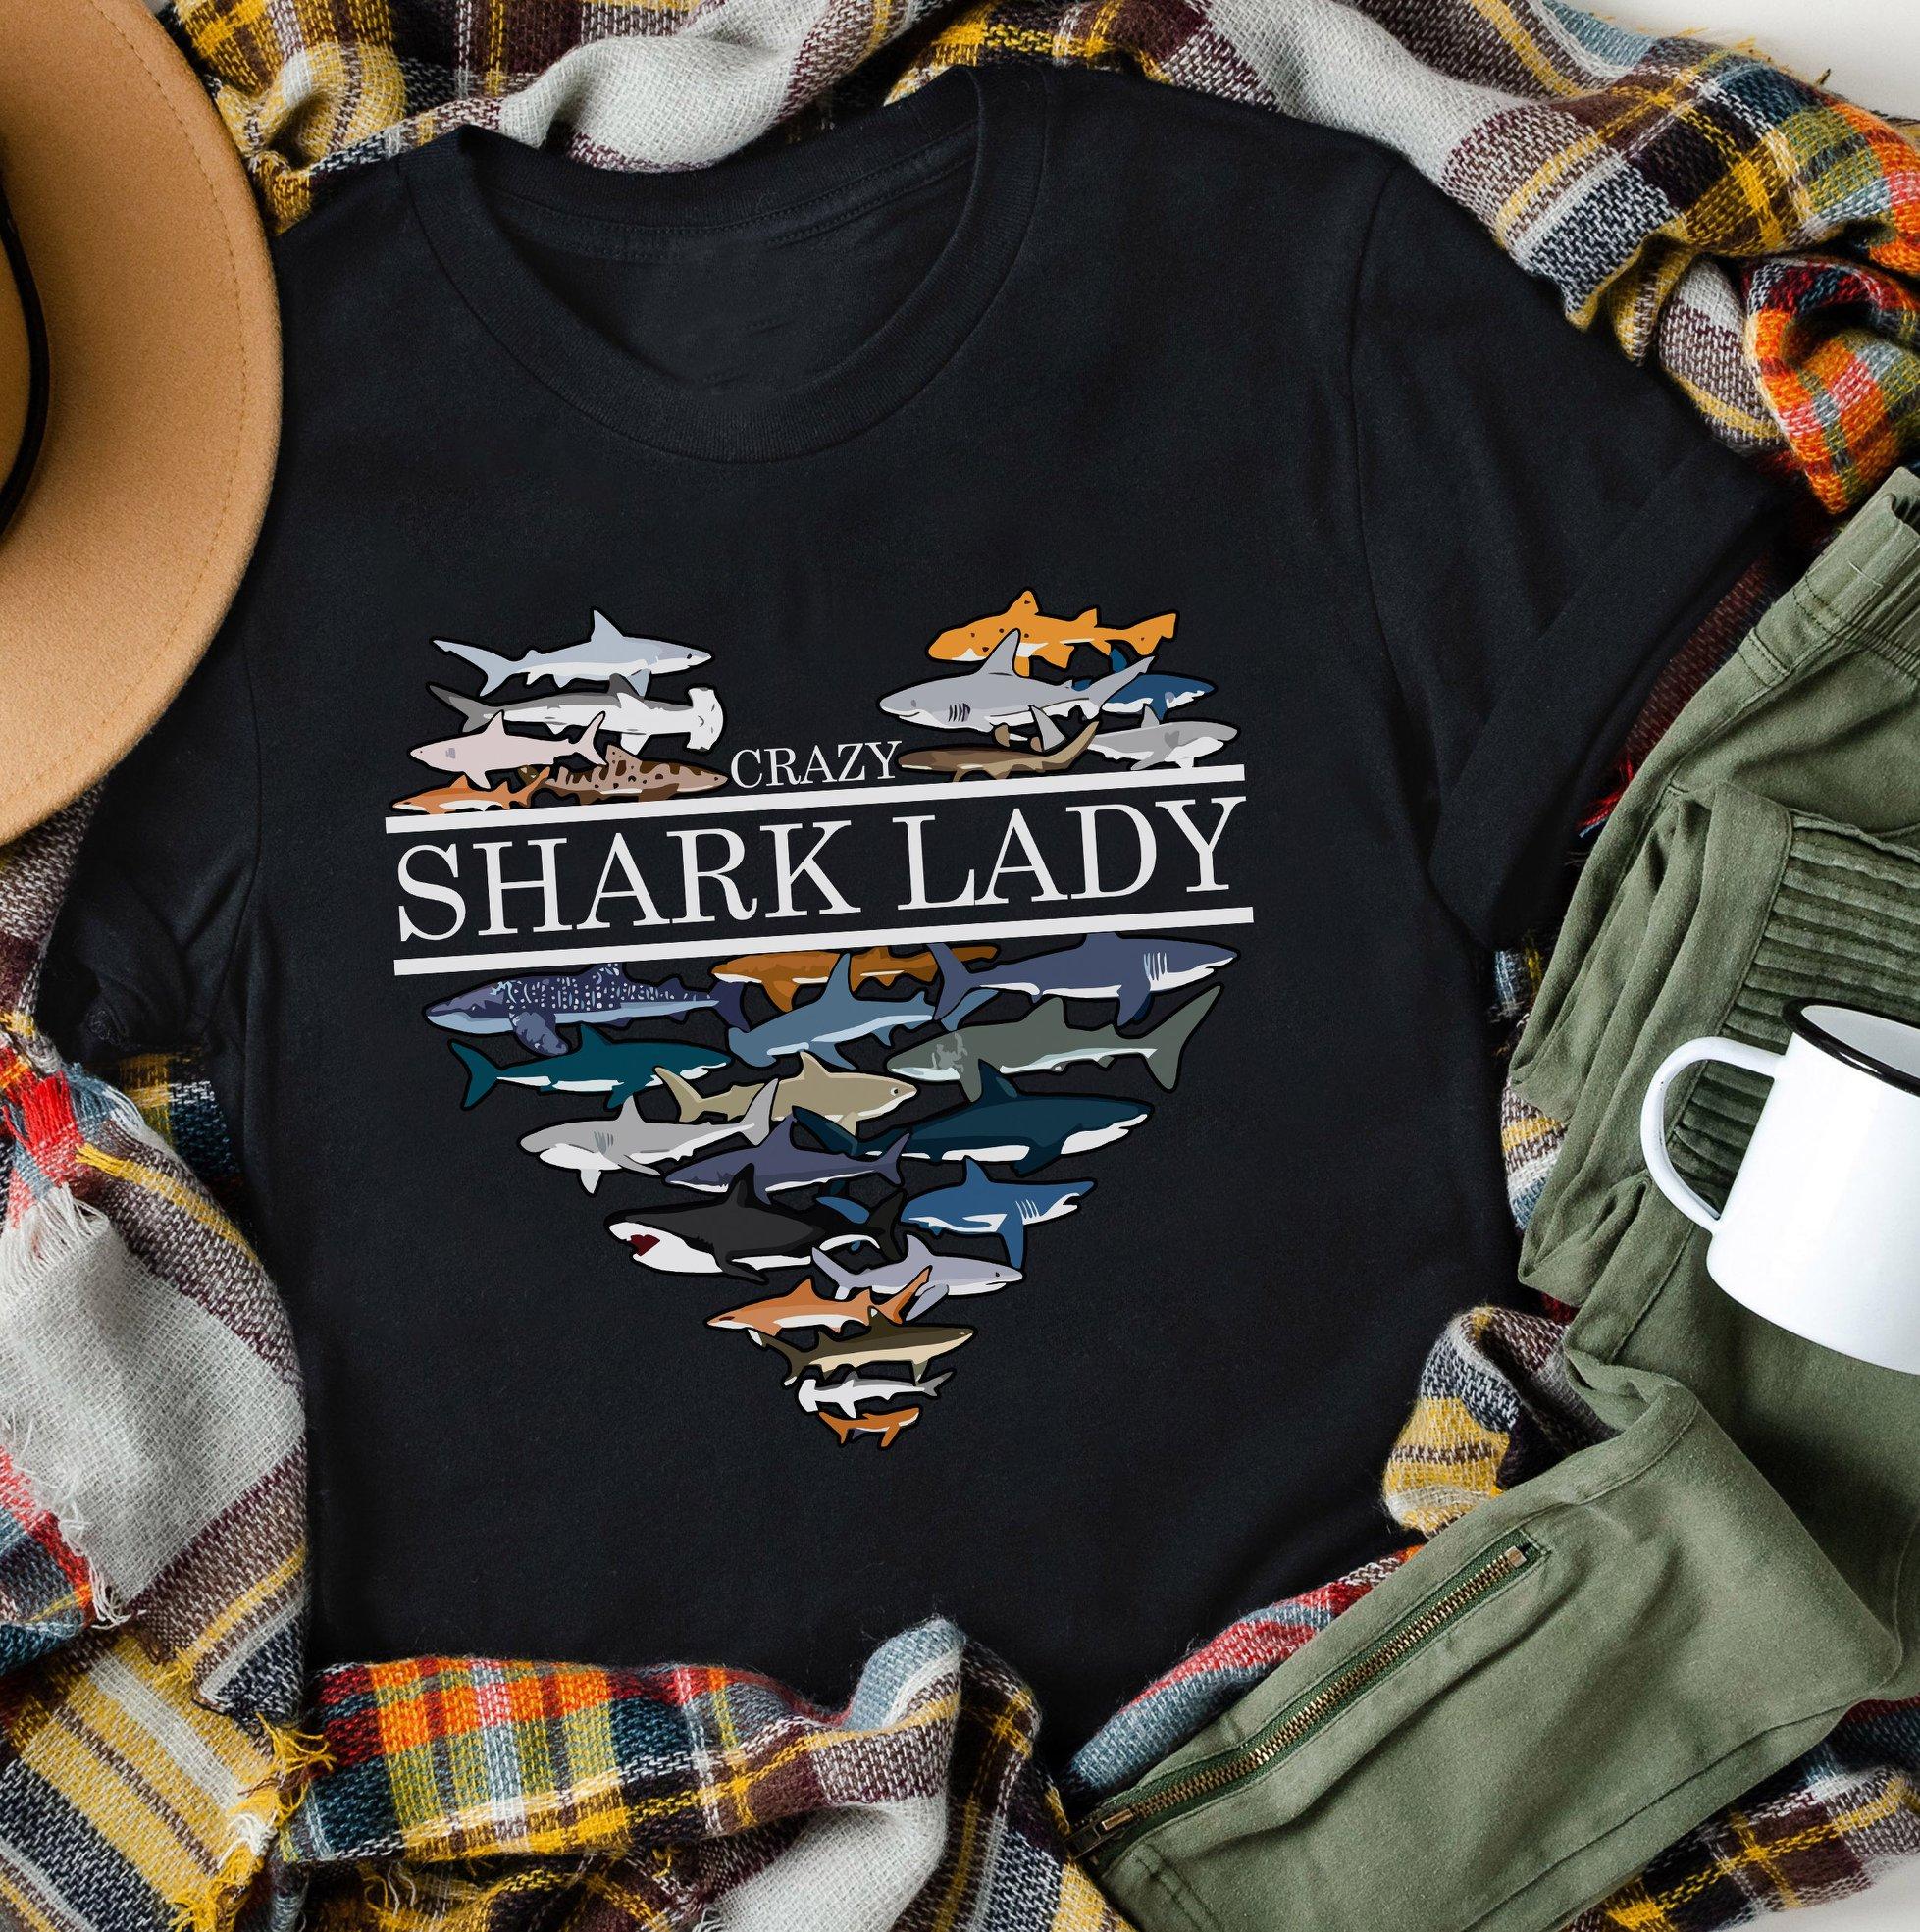 Crazy shark lady - Lady loves shark, every kind of sharks